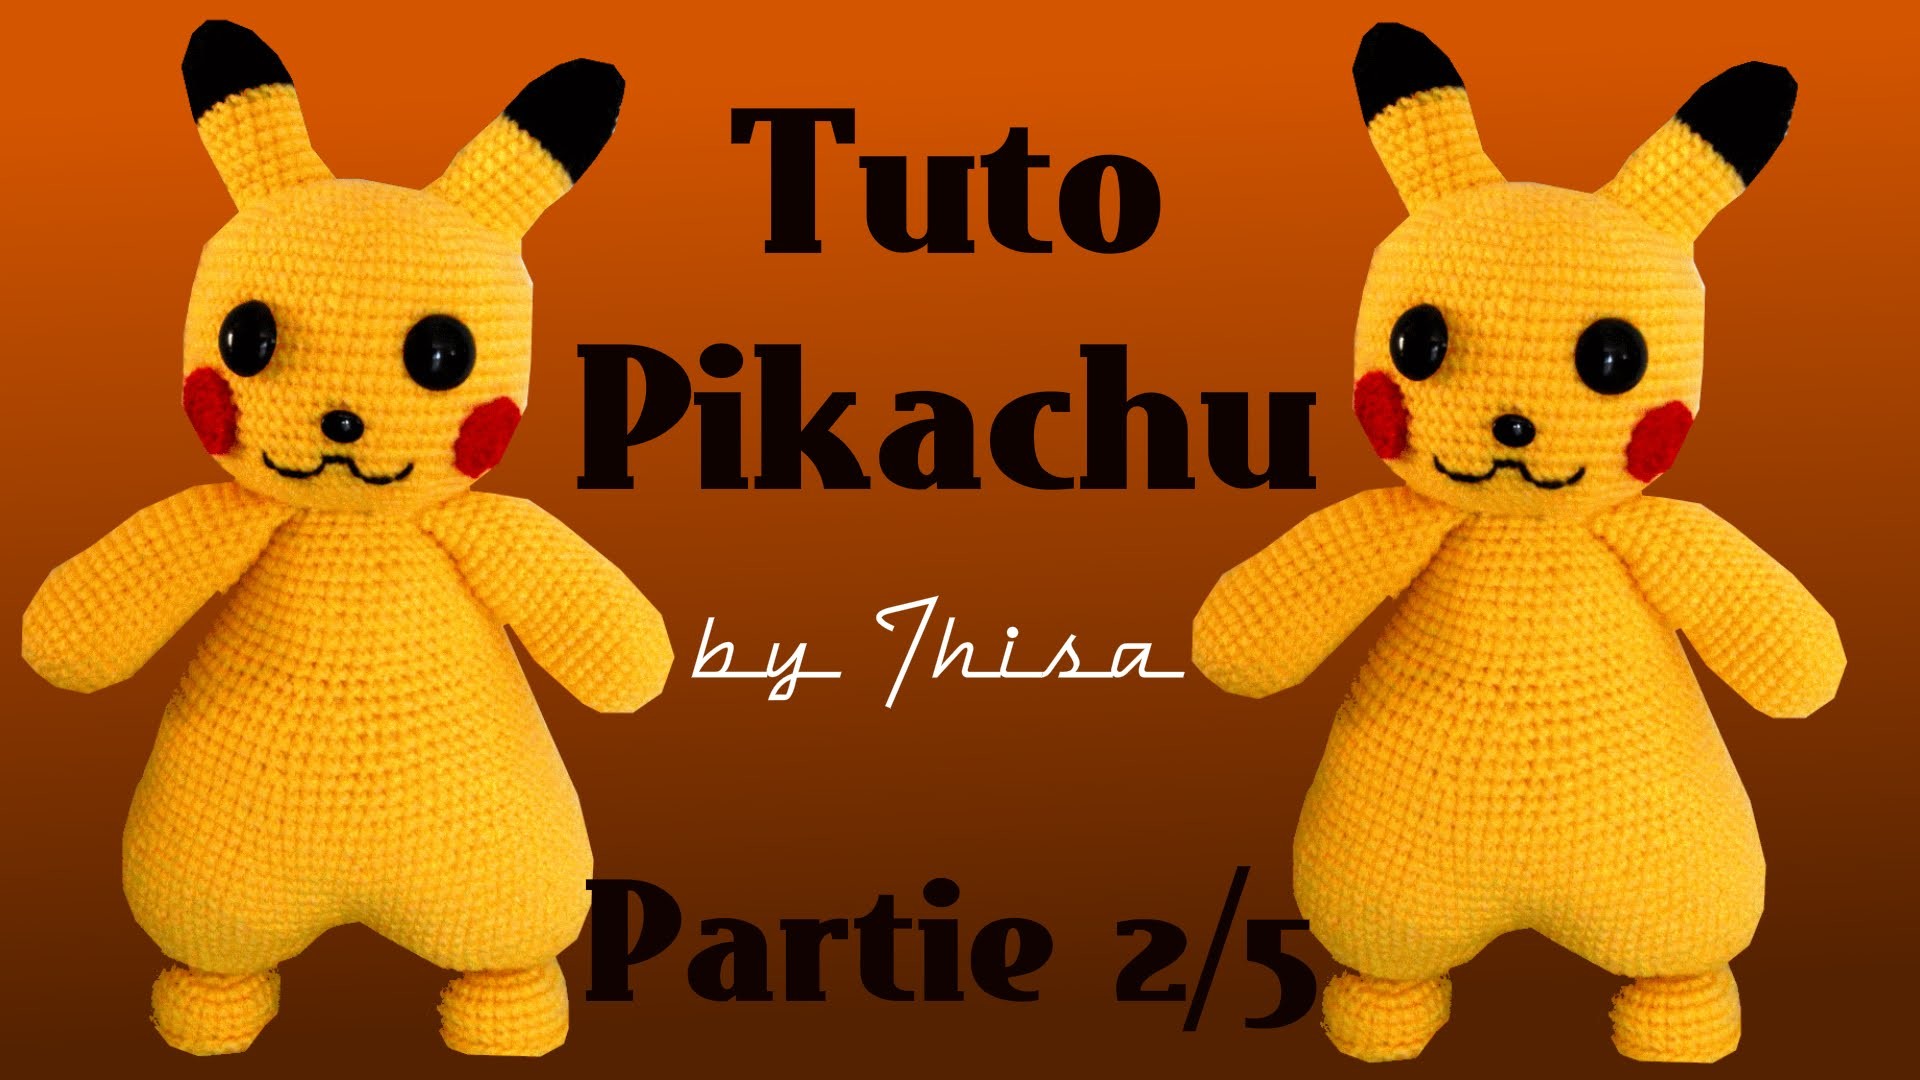 Tutoriel Pikachu crochet - Partie 2